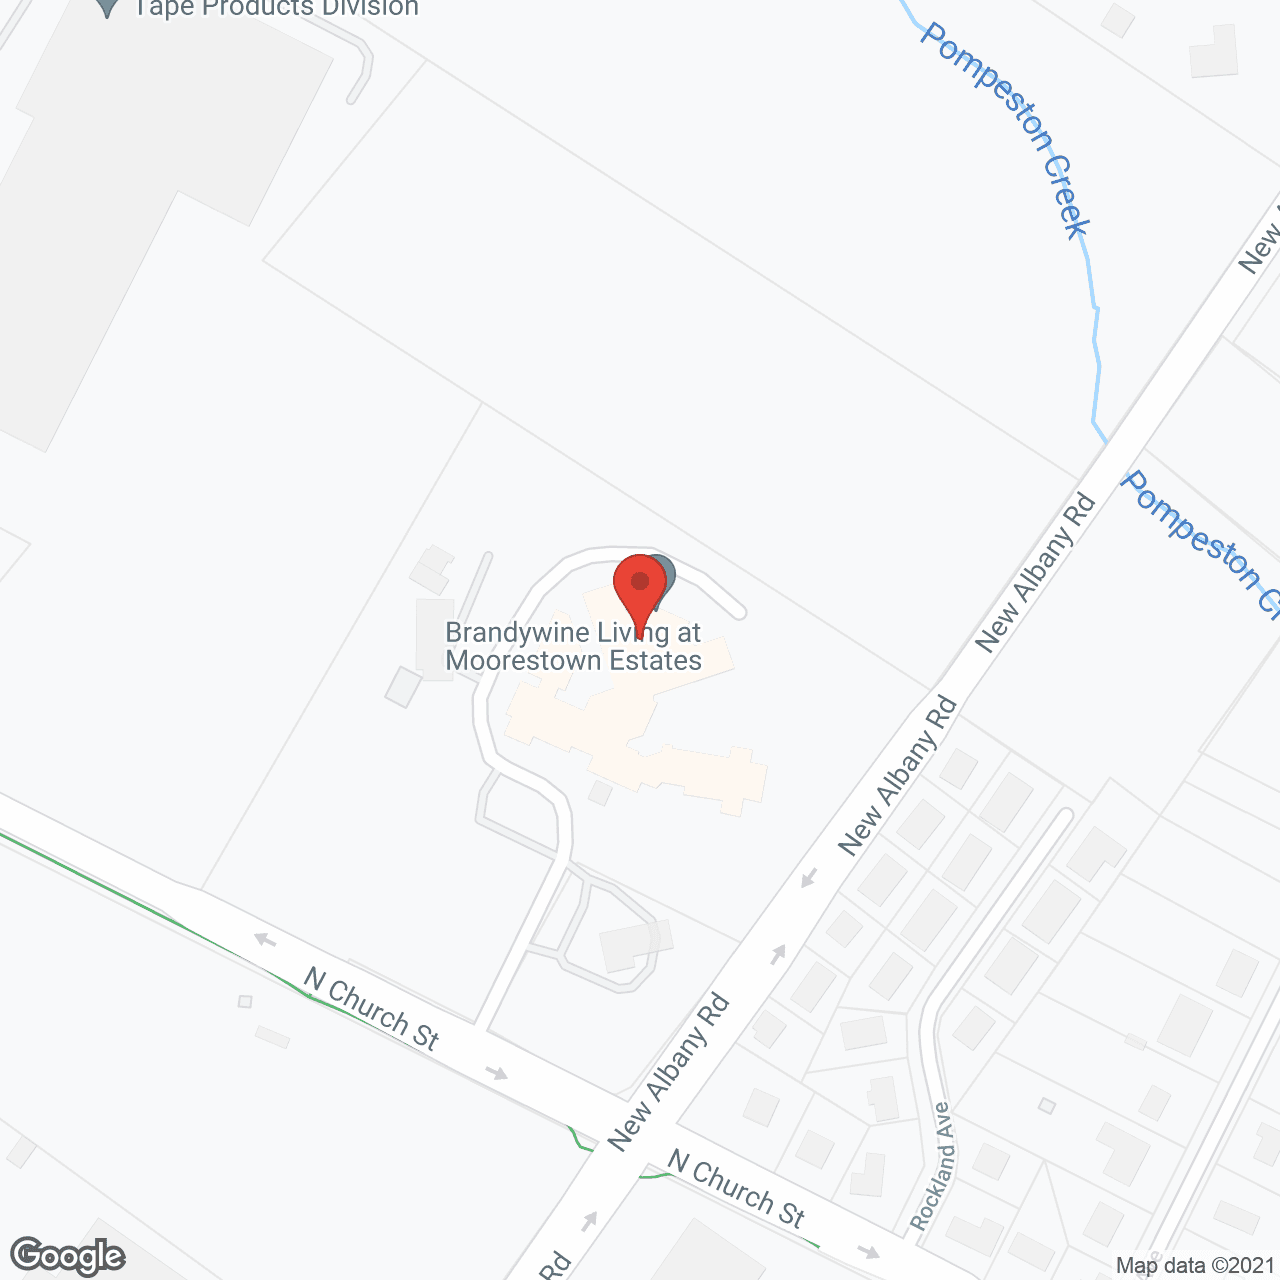 Brandywine at Moorestown Estates in google map